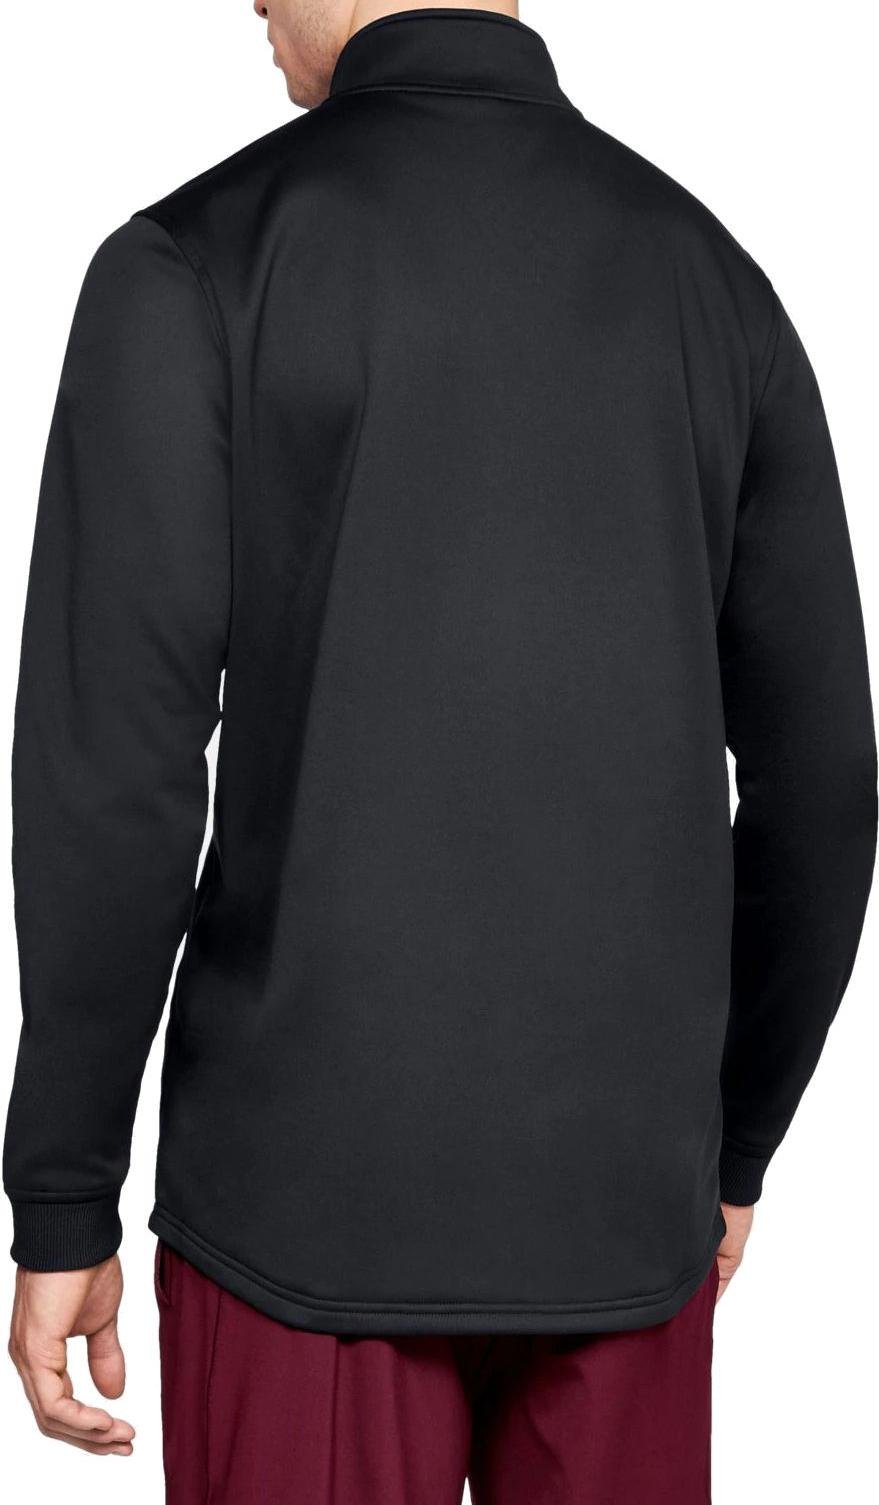 Under Armour Men's Armour Fleece 1/2 Zip Long Sleeve Shirt Style #1320745 NWT